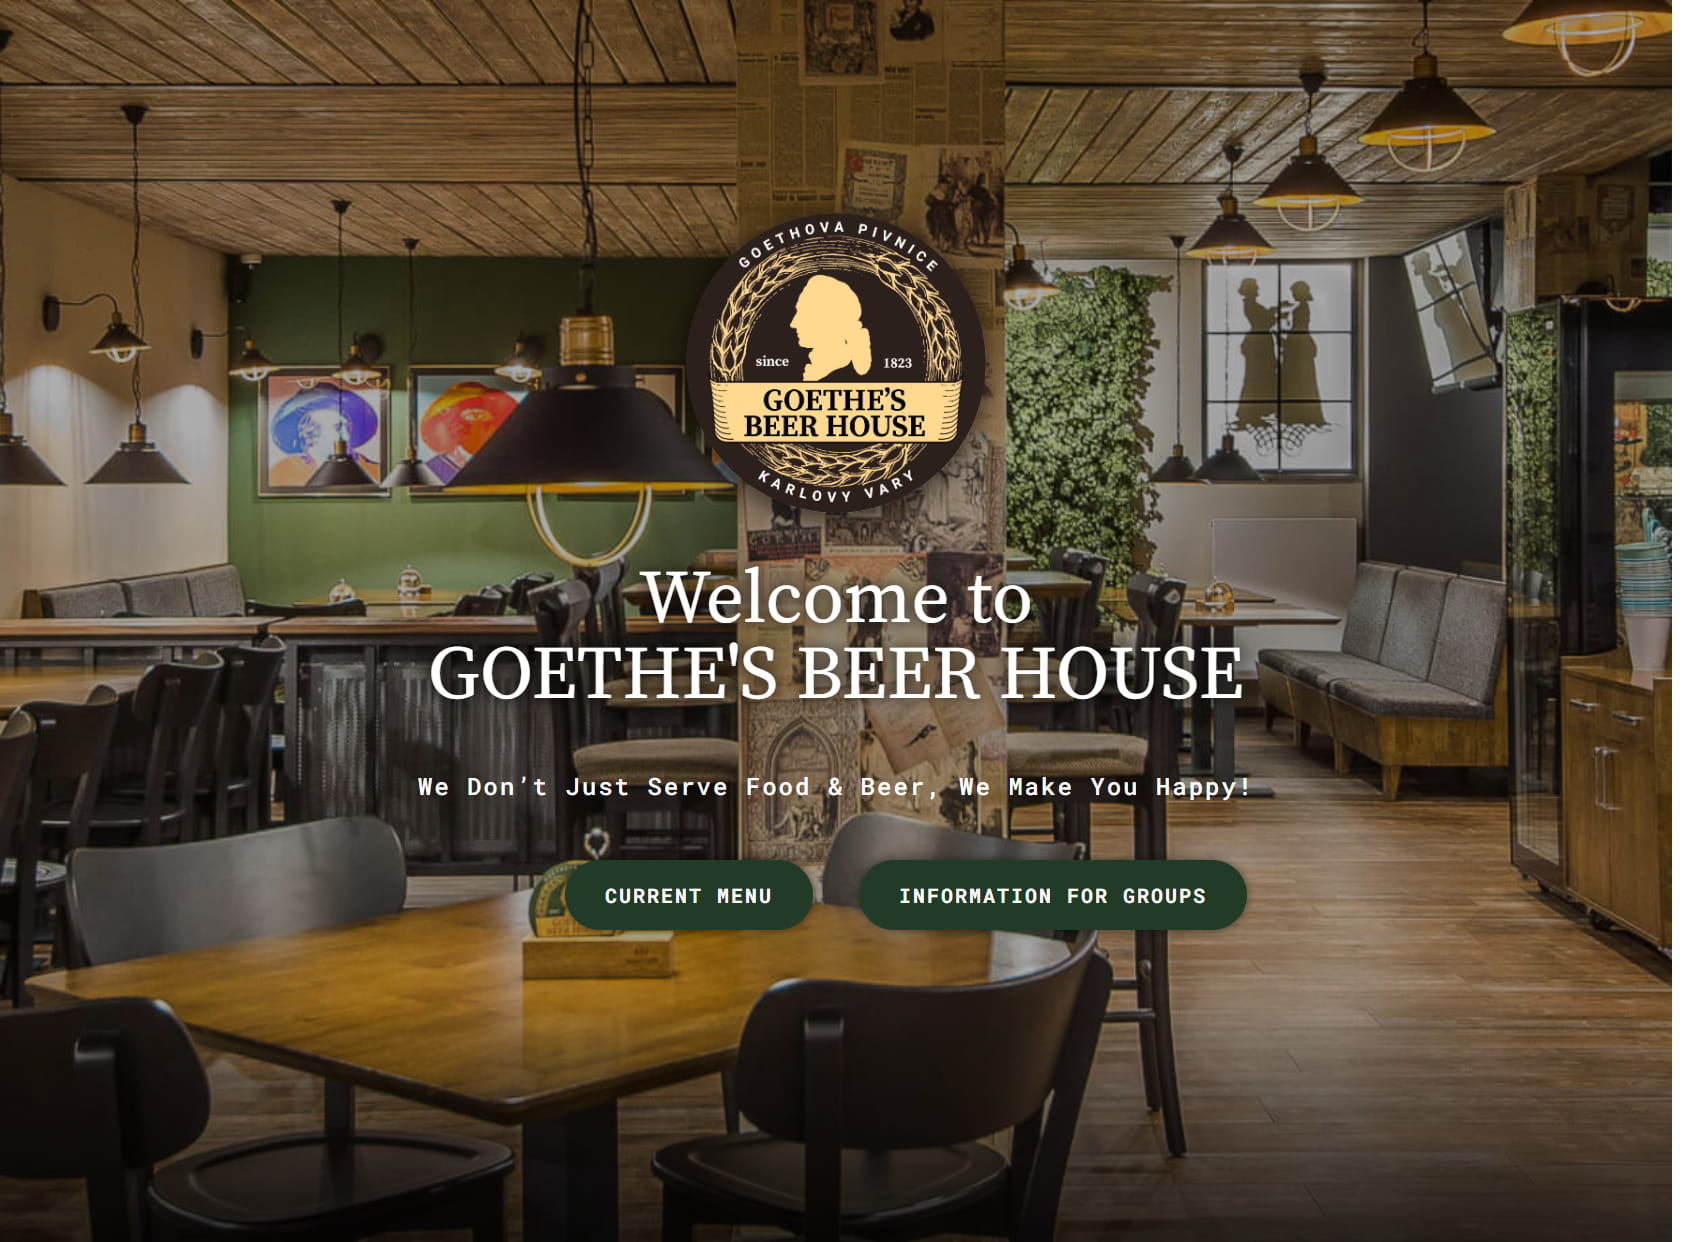 Goethe's Beer House - Goethova Pivnice